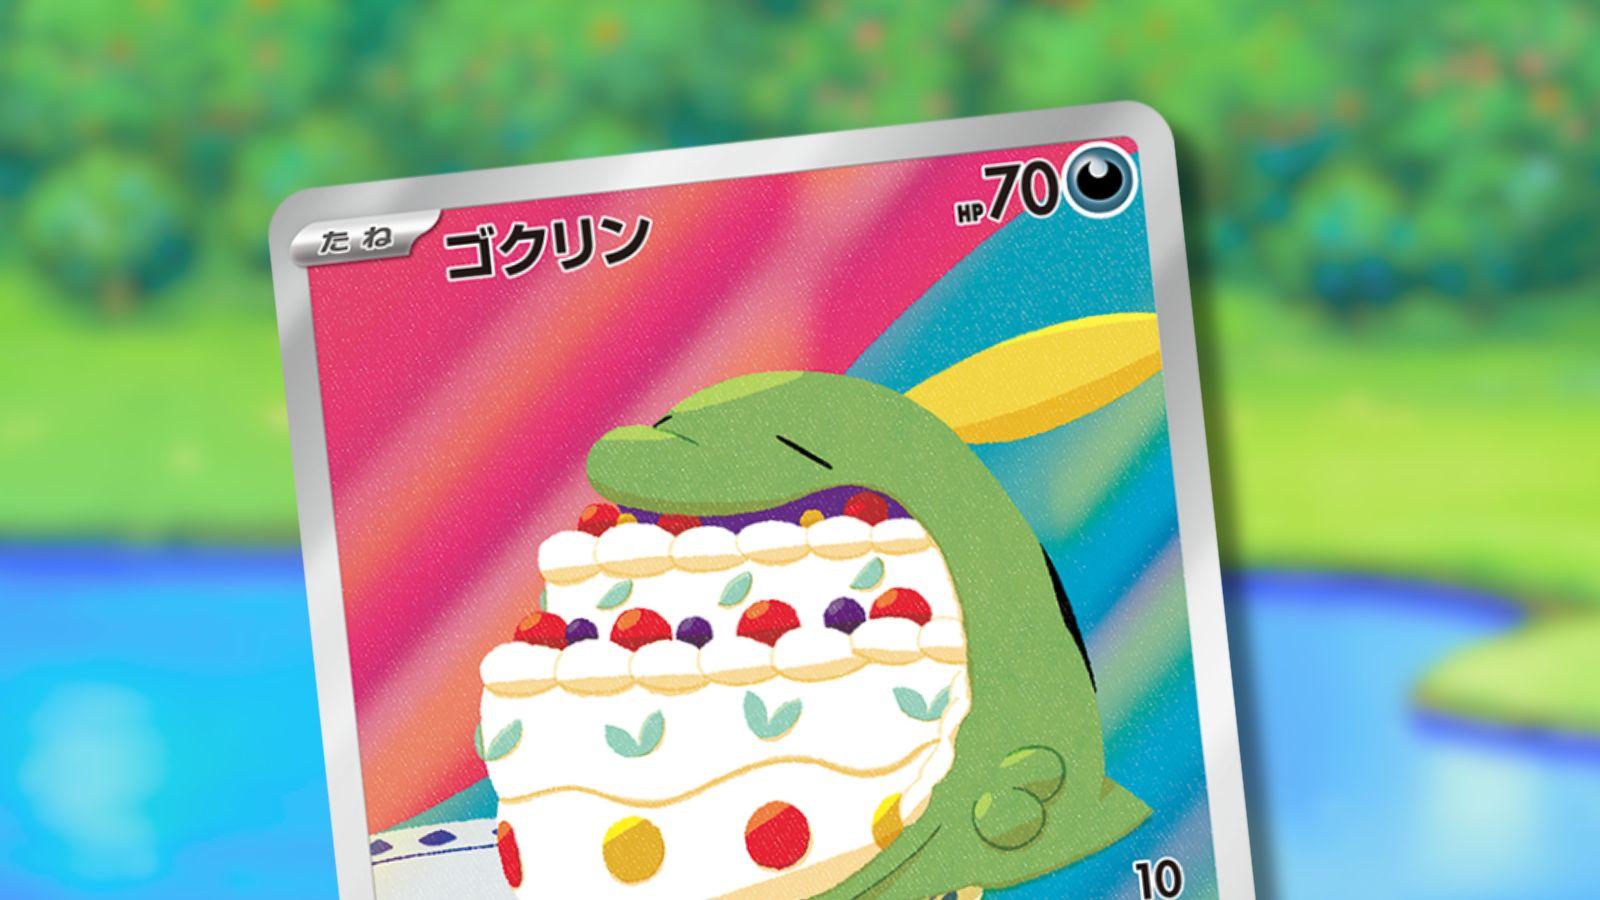 Gulpin Pokemon card with anime background.